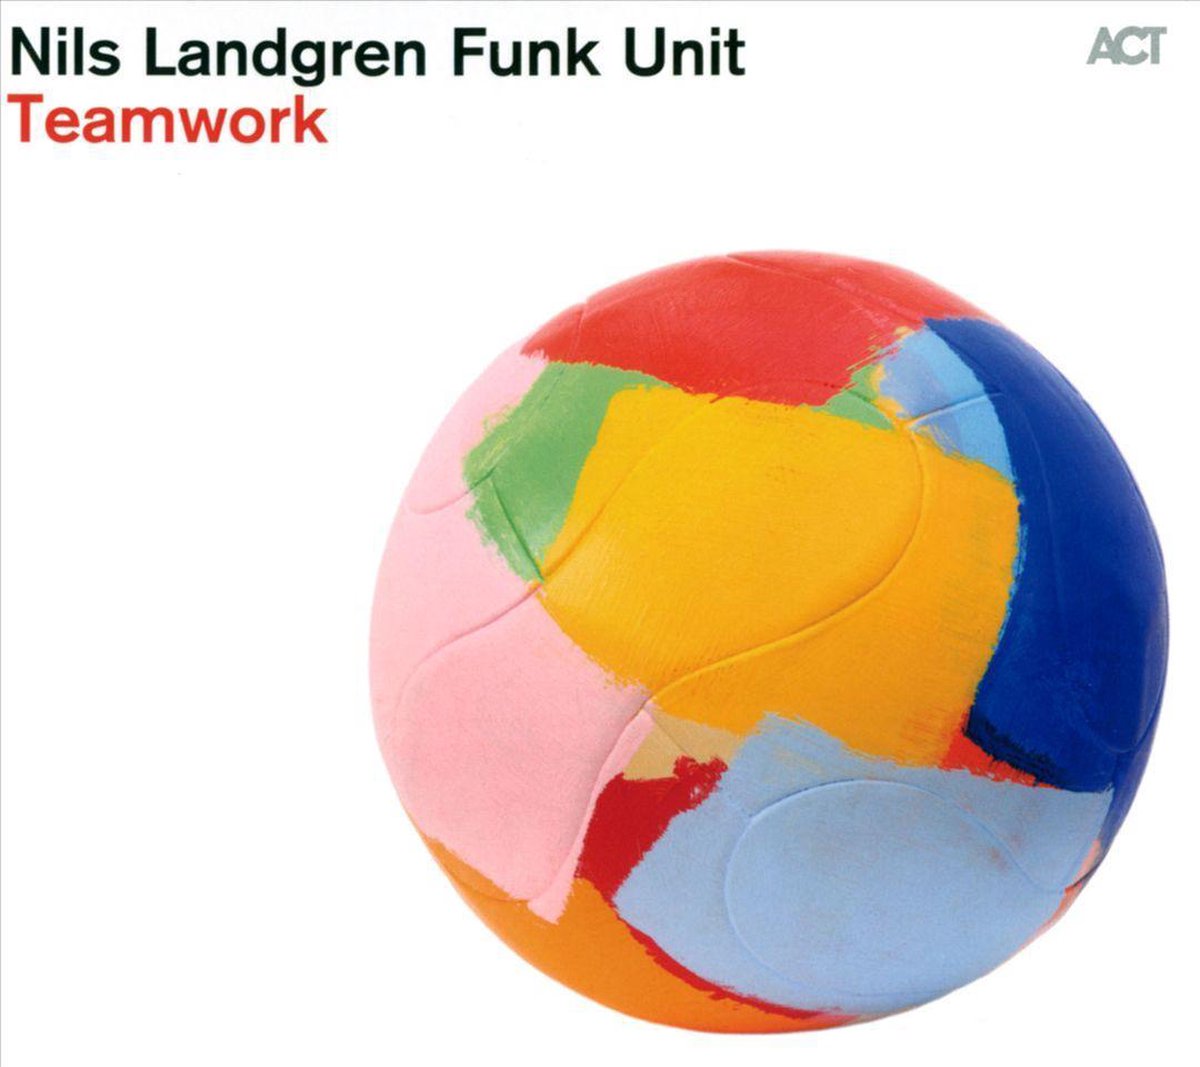 Teamwork | Nils Landgren Funk Unit